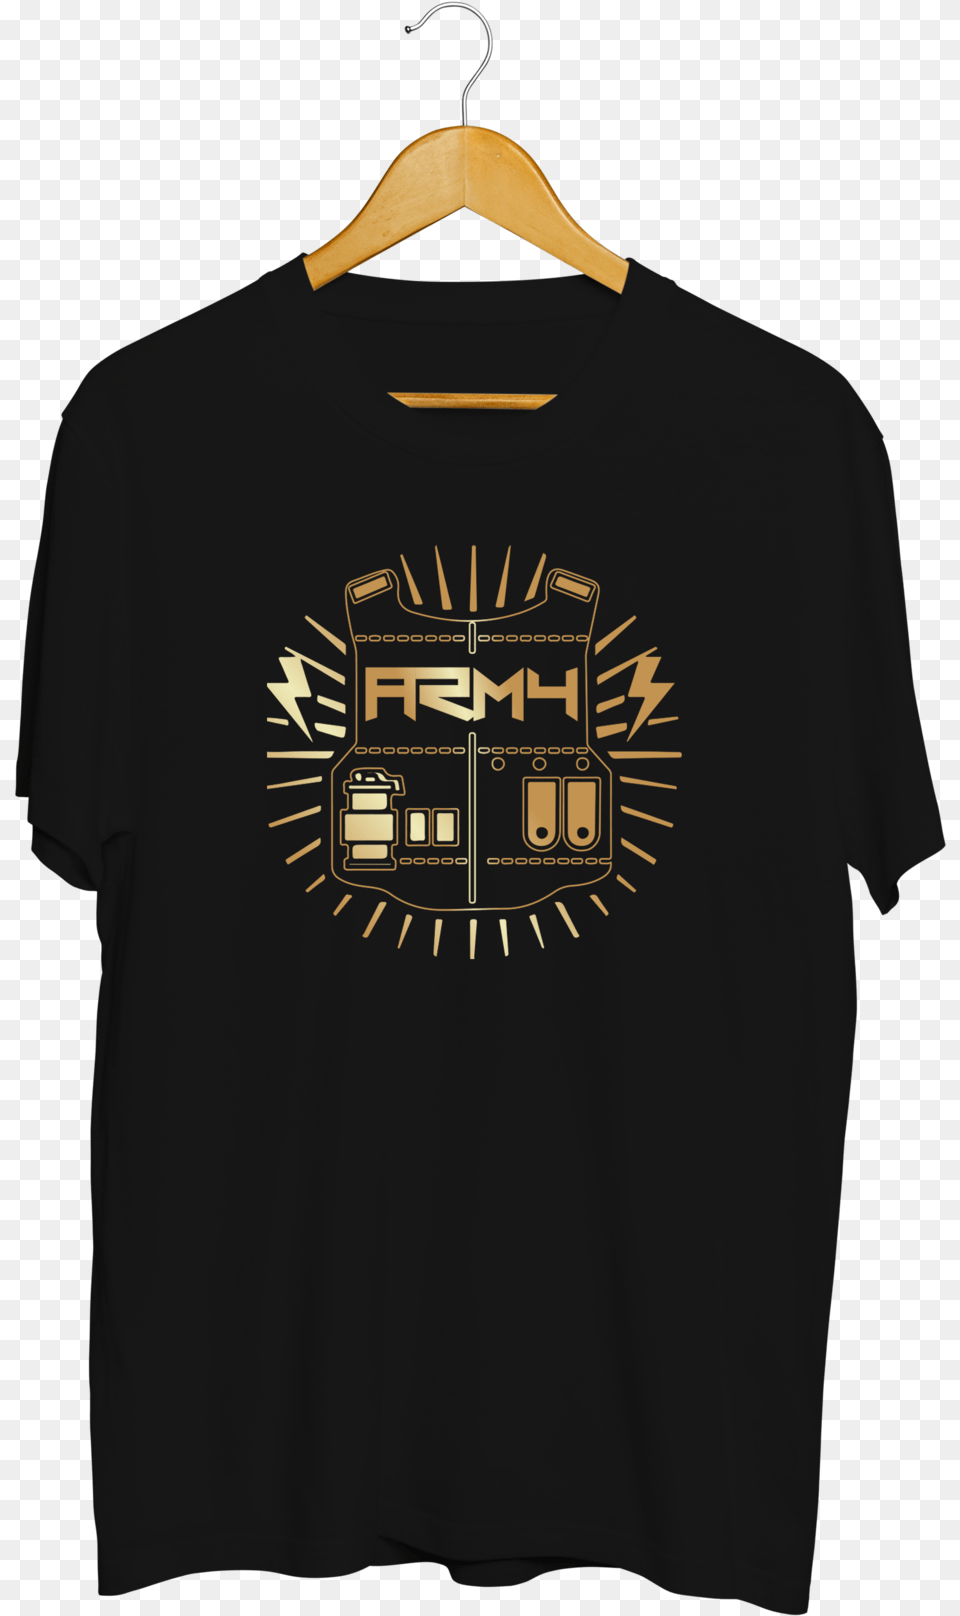 Bts Army Gold Shield Black T Shirt Carl Cox Tee Shirts Dj, Clothing, T-shirt, Adult, Male Free Png Download